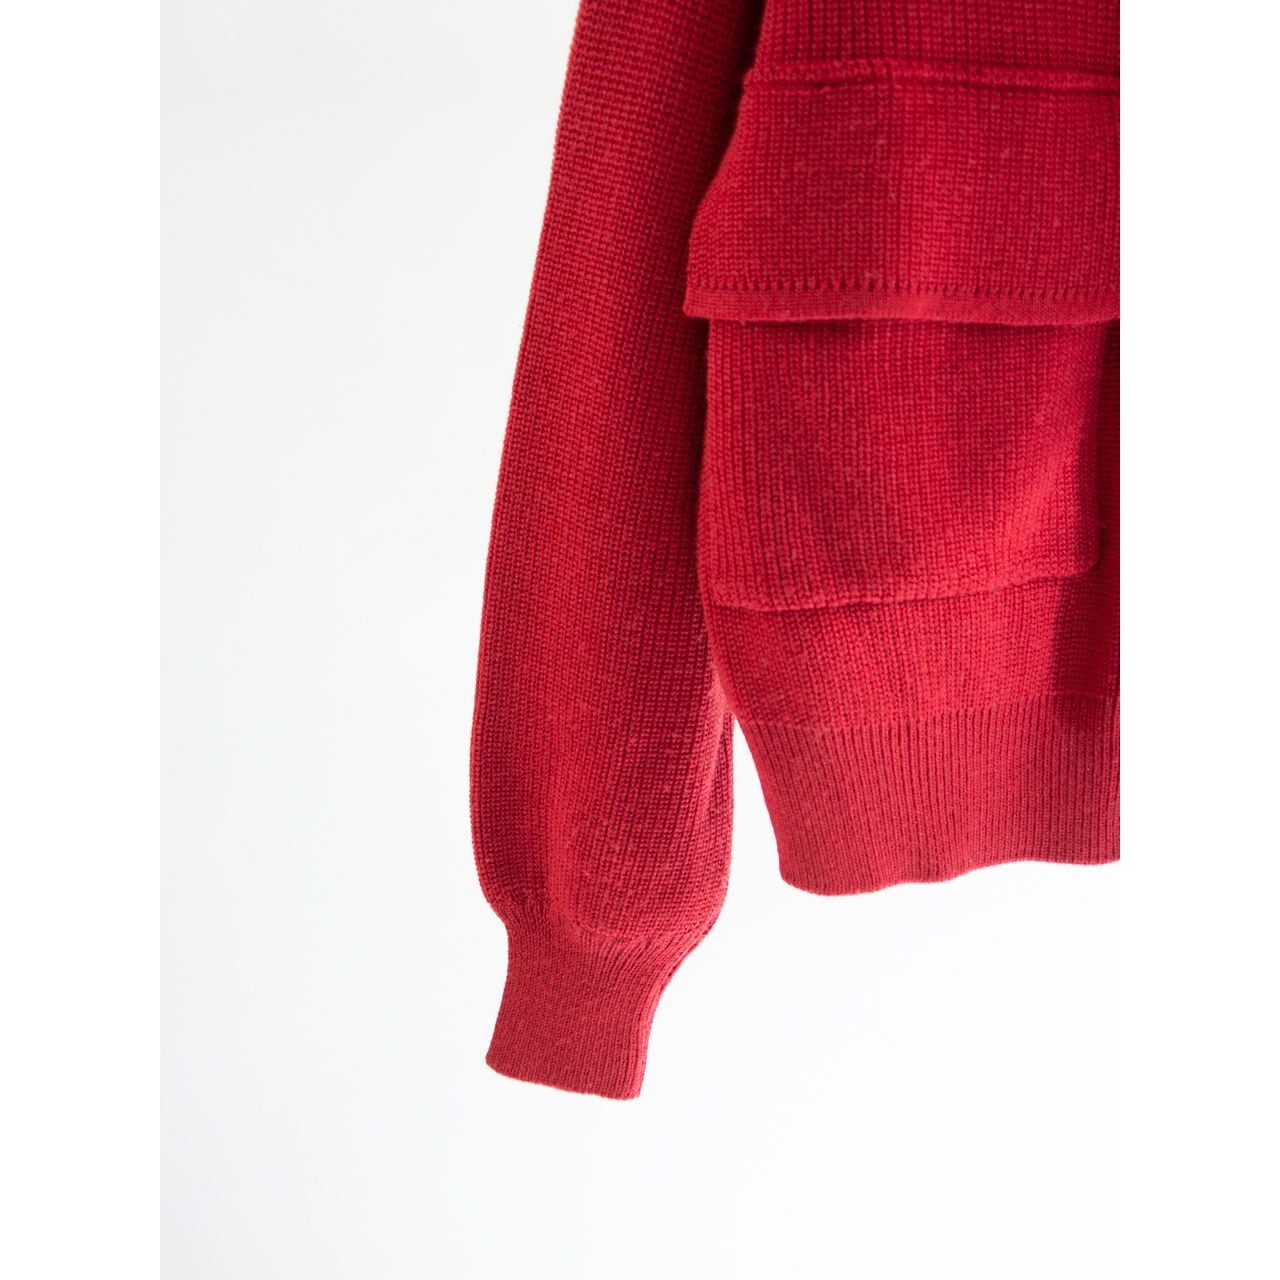 Salvatore Ferragamo】Made in Italy 100% Wool Oversized Knit Jacket